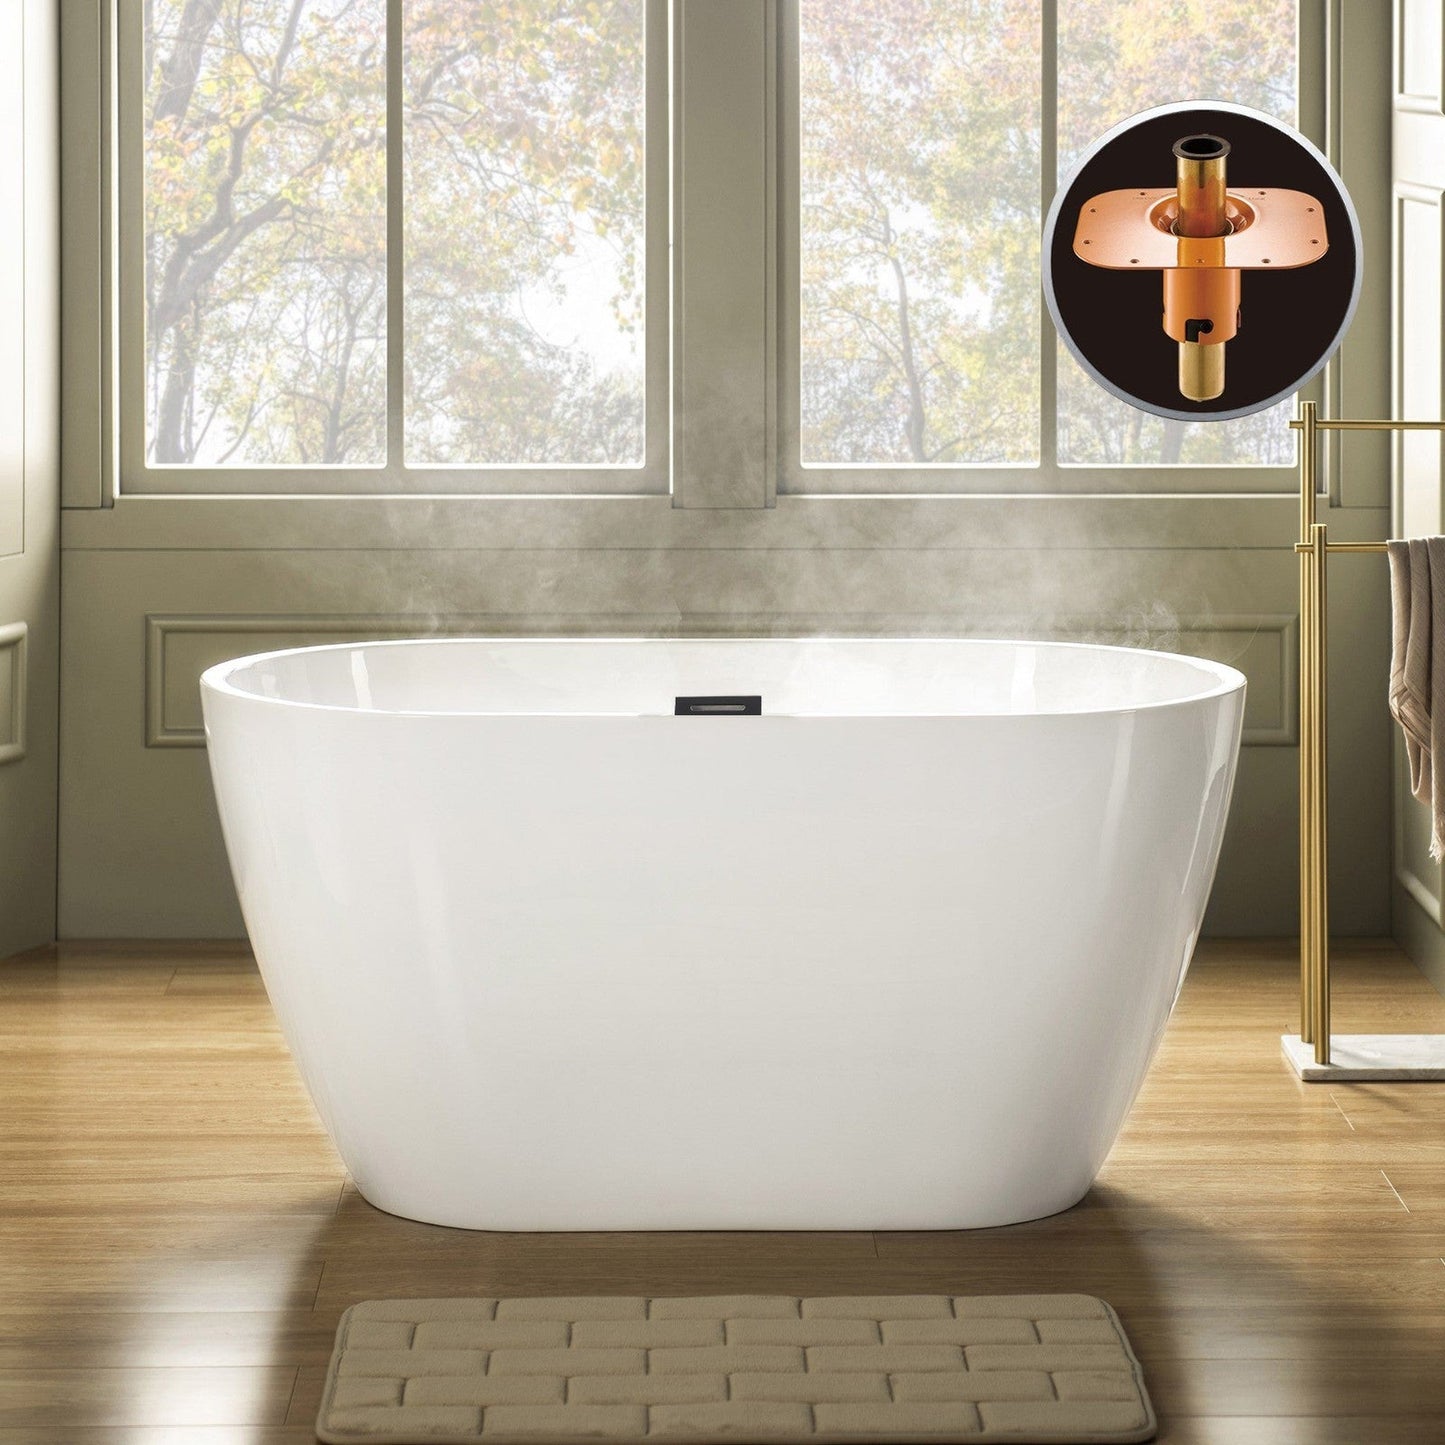 WoodBridge 48" White Freestanding Soaking Bathtub With Matte Black Drain,Overflow, F0006MBVT Tub Filler and Caddy Tray